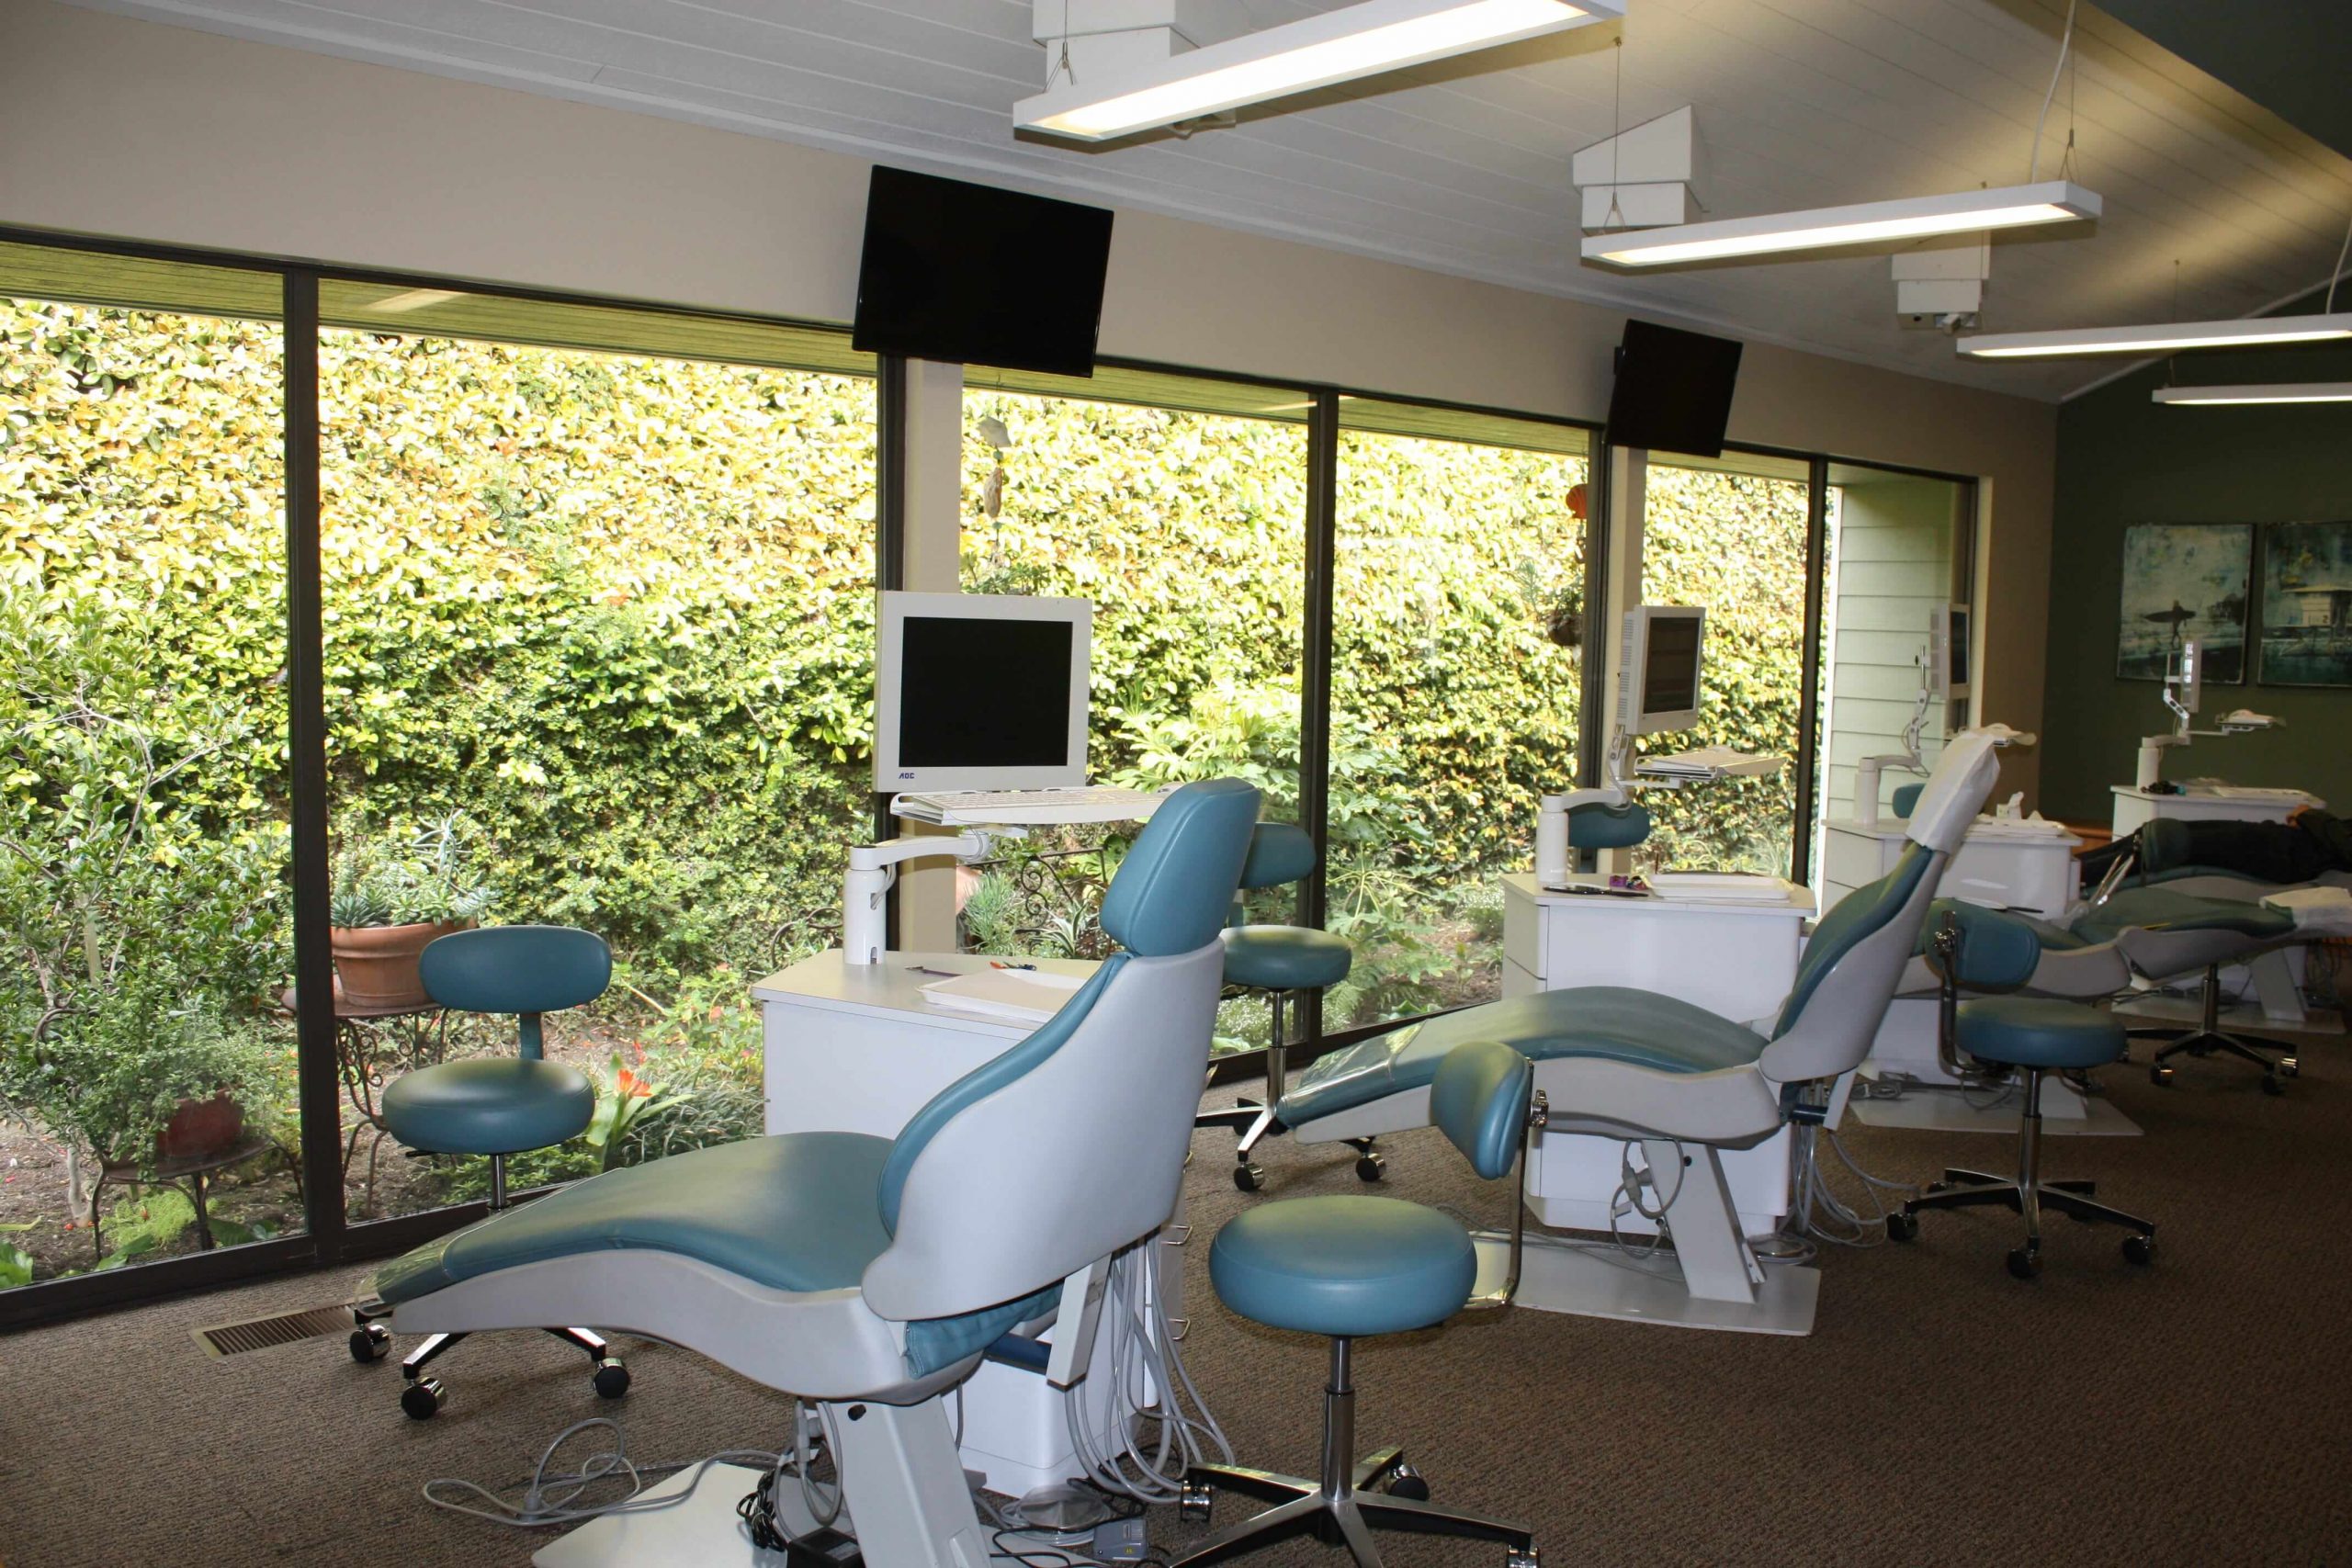 Orthodontics and Braces. Alpha Dental Care - Milton Dentist Office